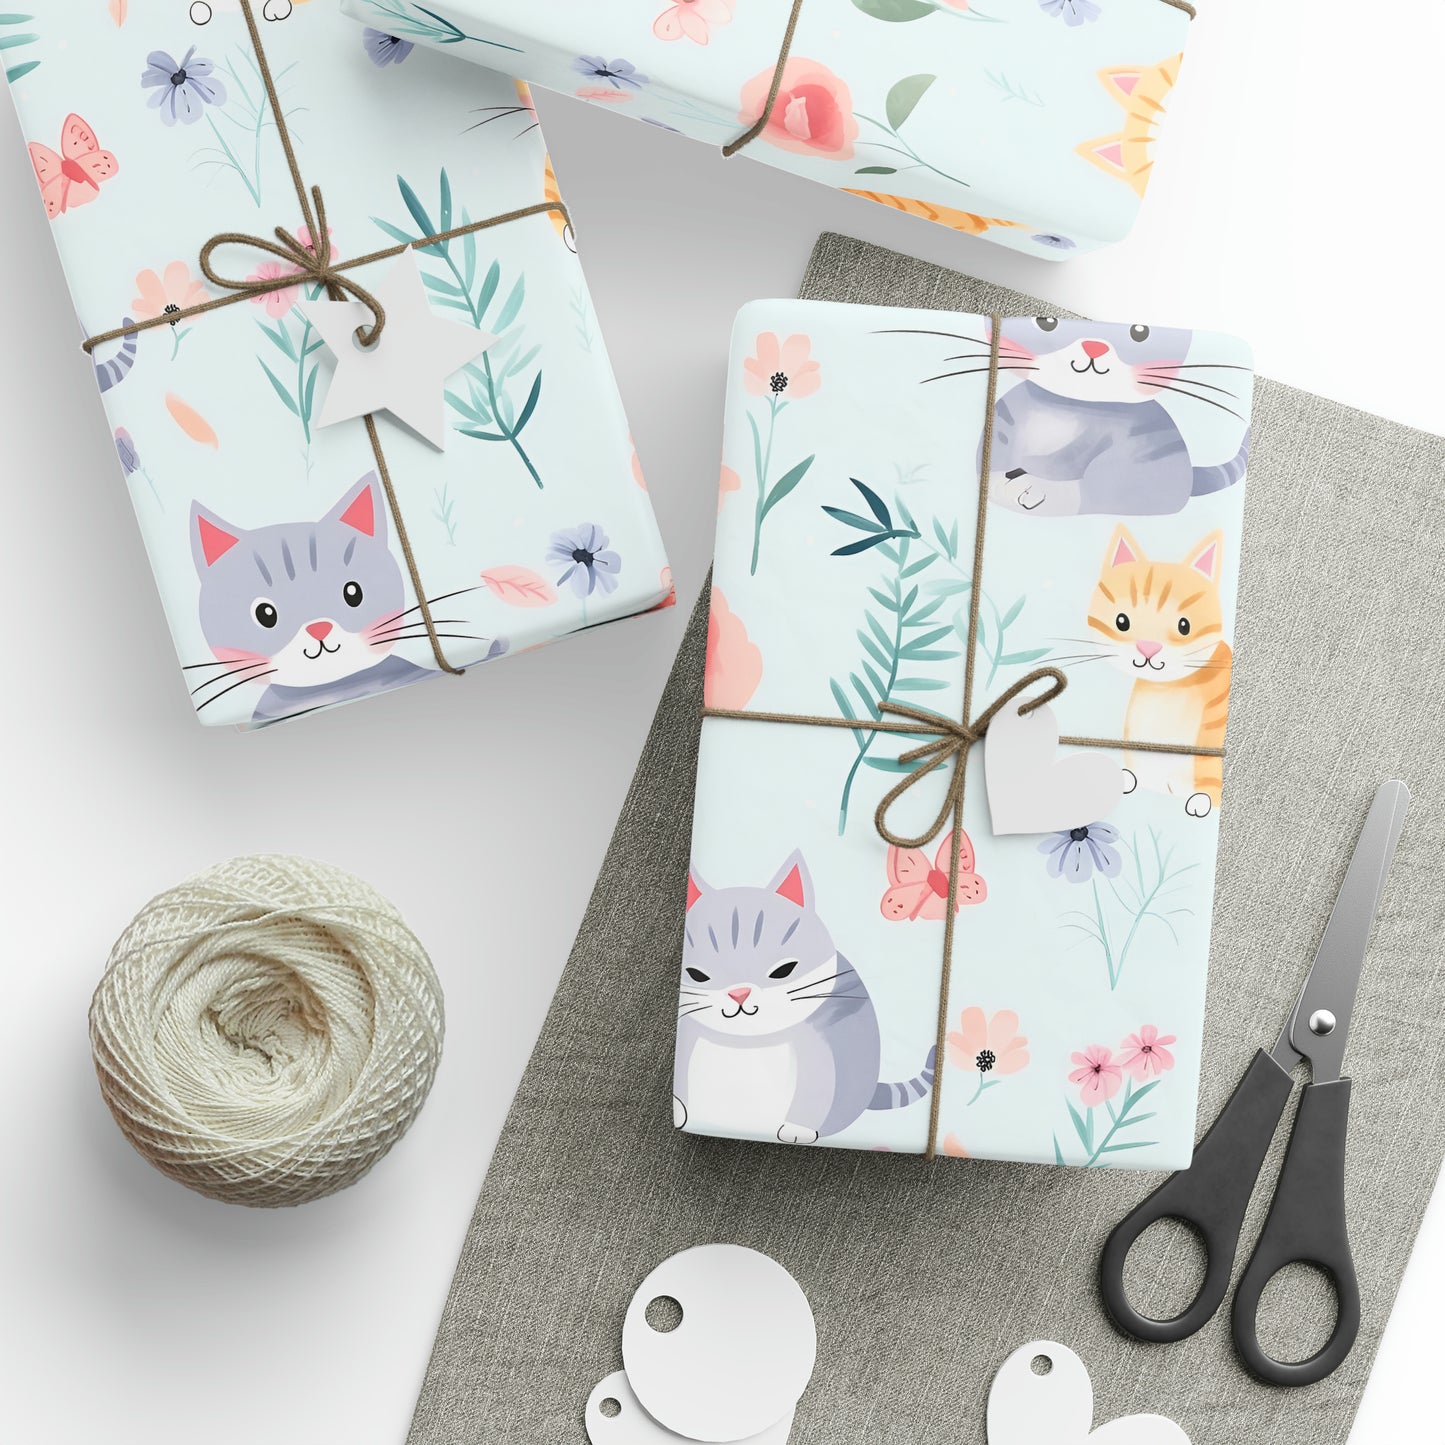 Kitten pattern wrapping paper pattern